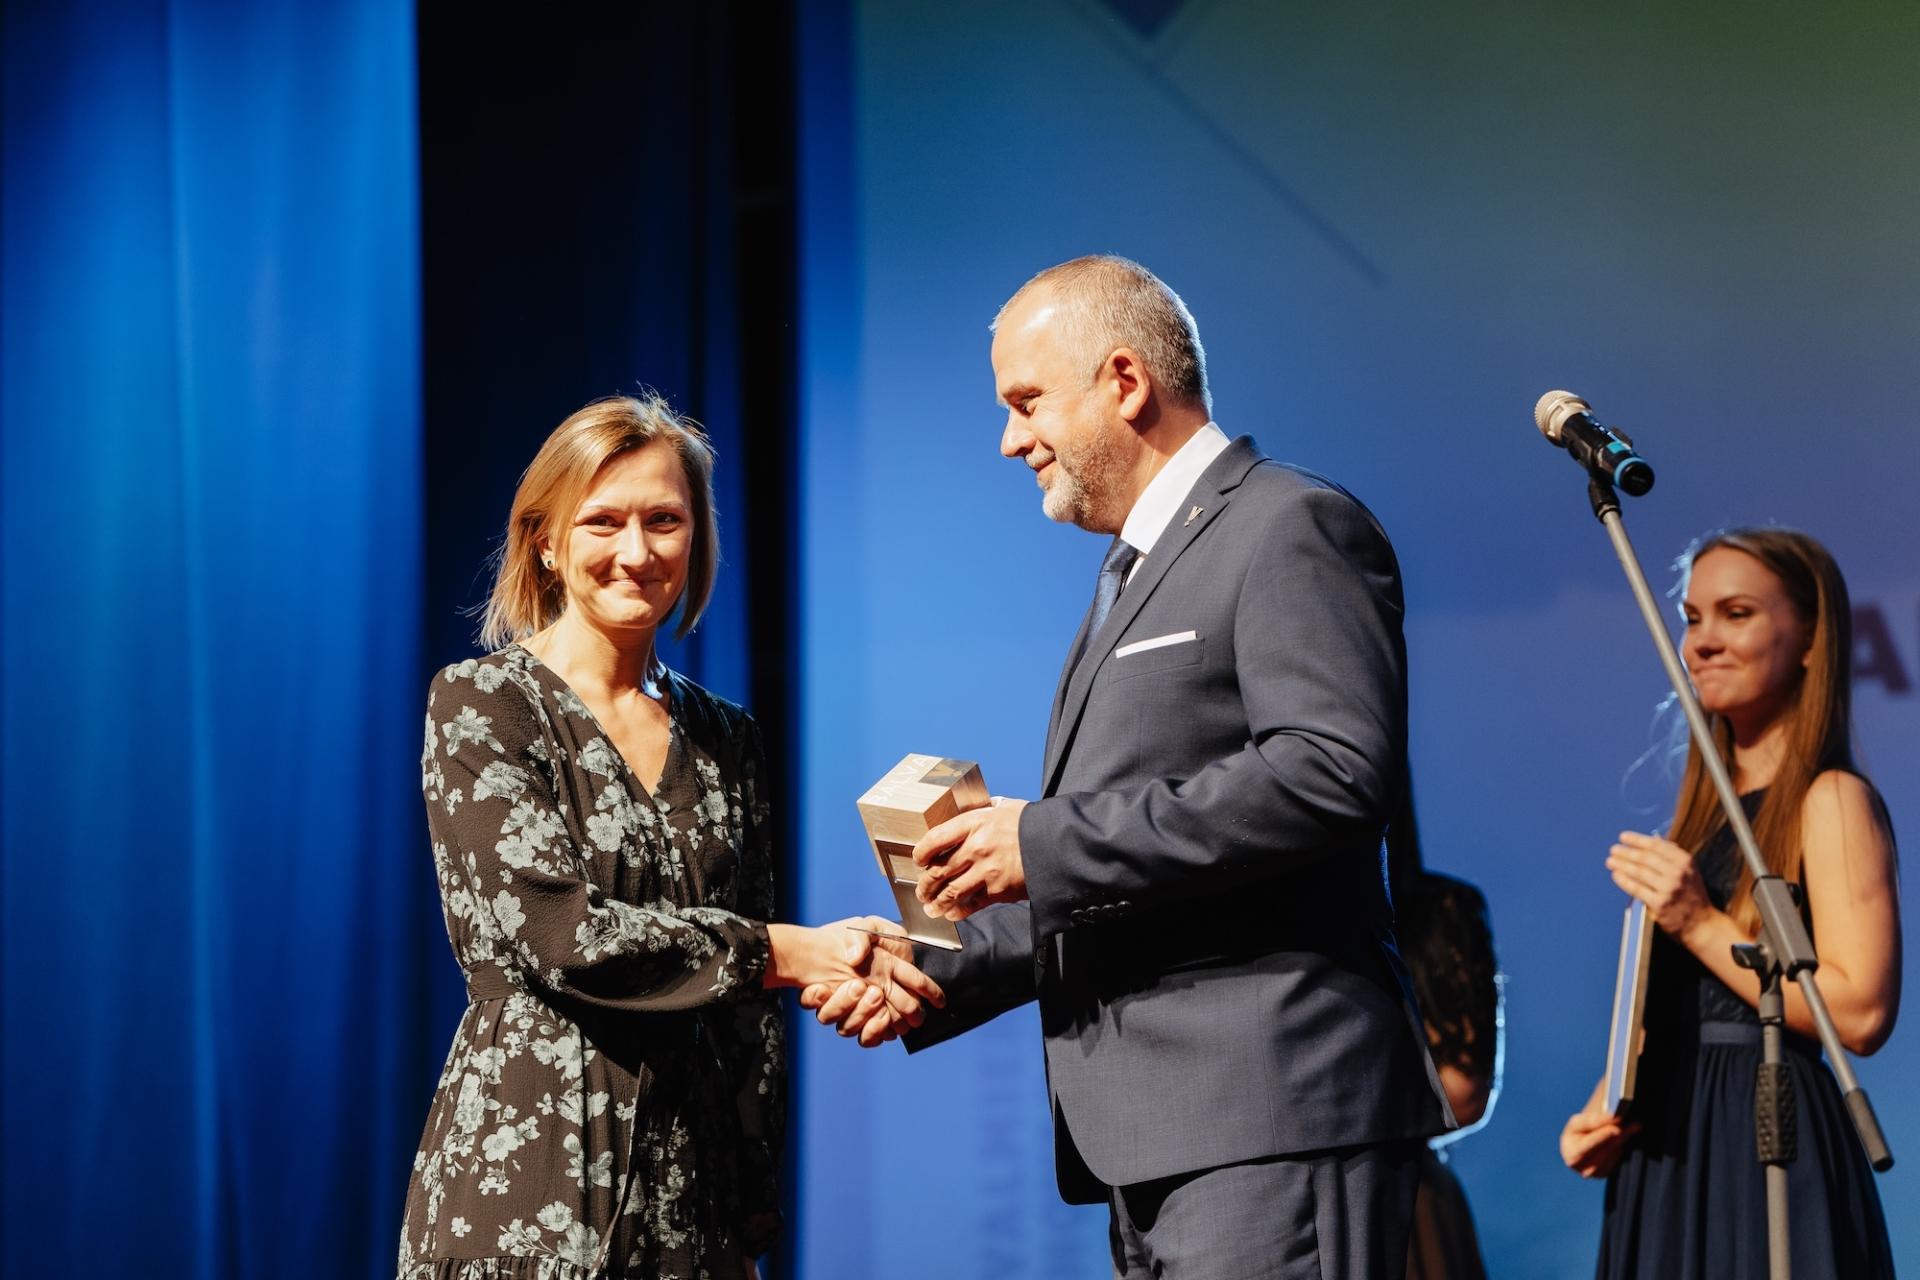 Ilze receiving an award from mayor of Valmiera